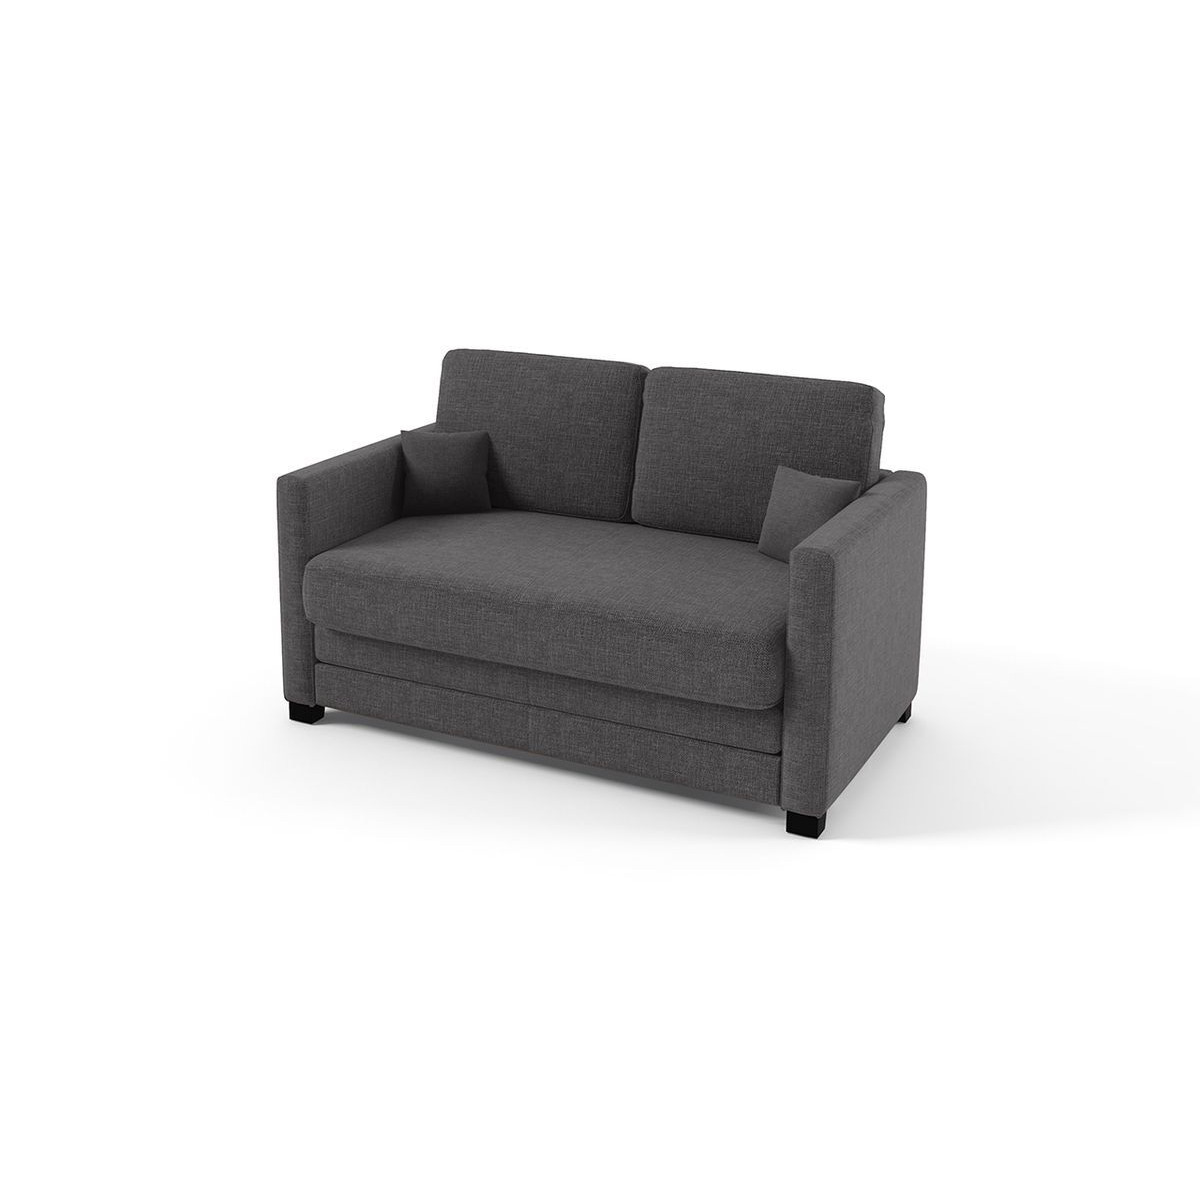 Boom 2 Seater Sofa Bed, dark grey - image 1